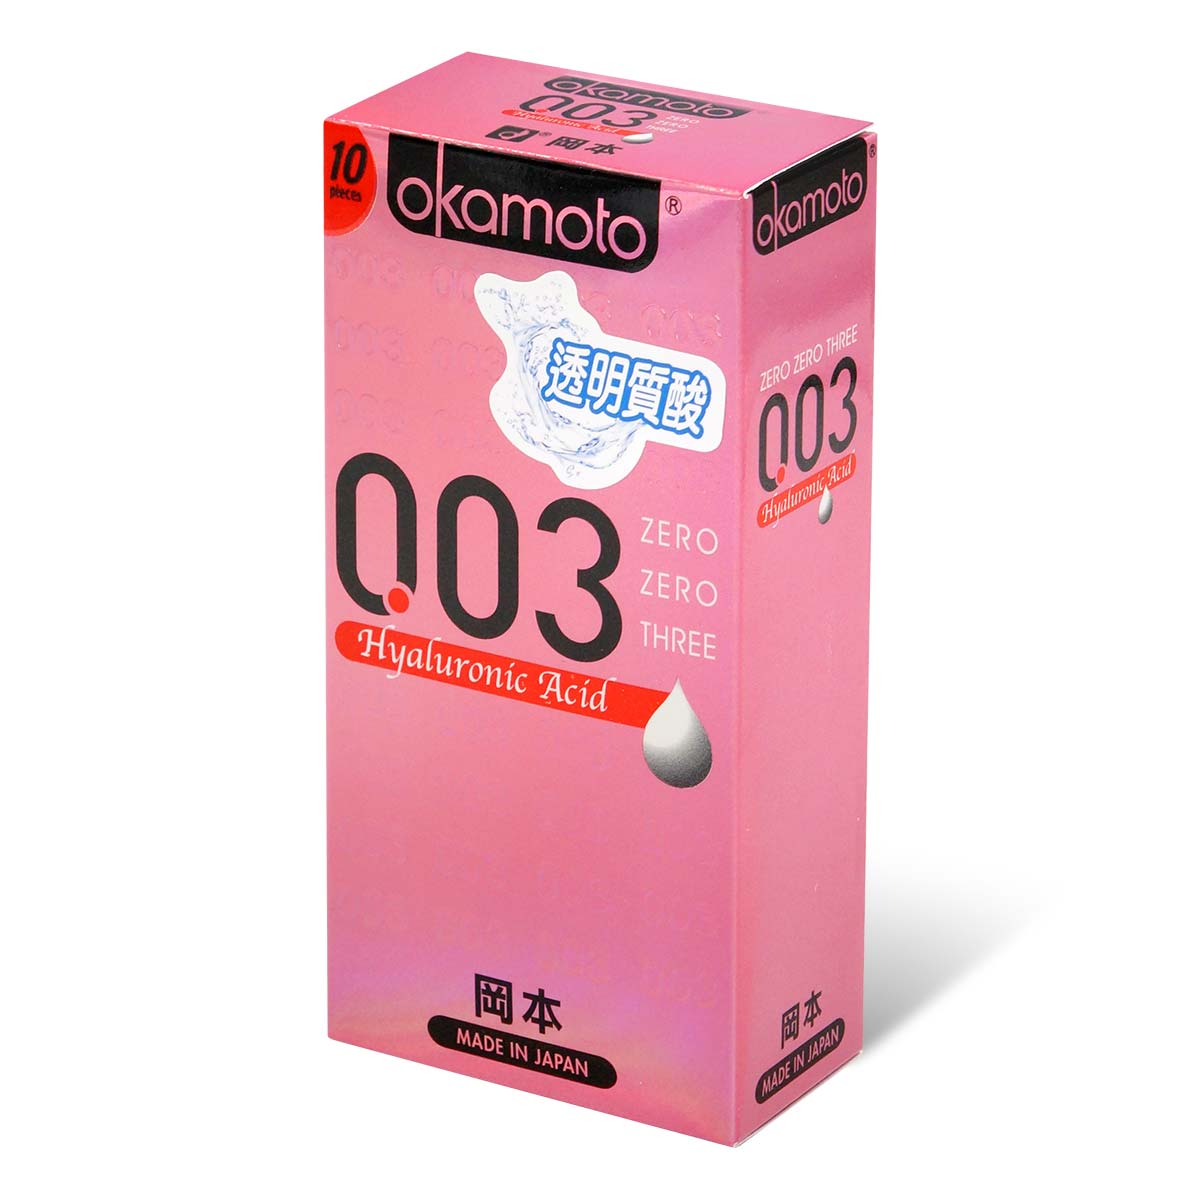 Okamoto 0.03 Hyaluronic acid 10's Pack Latex Condom-p_1